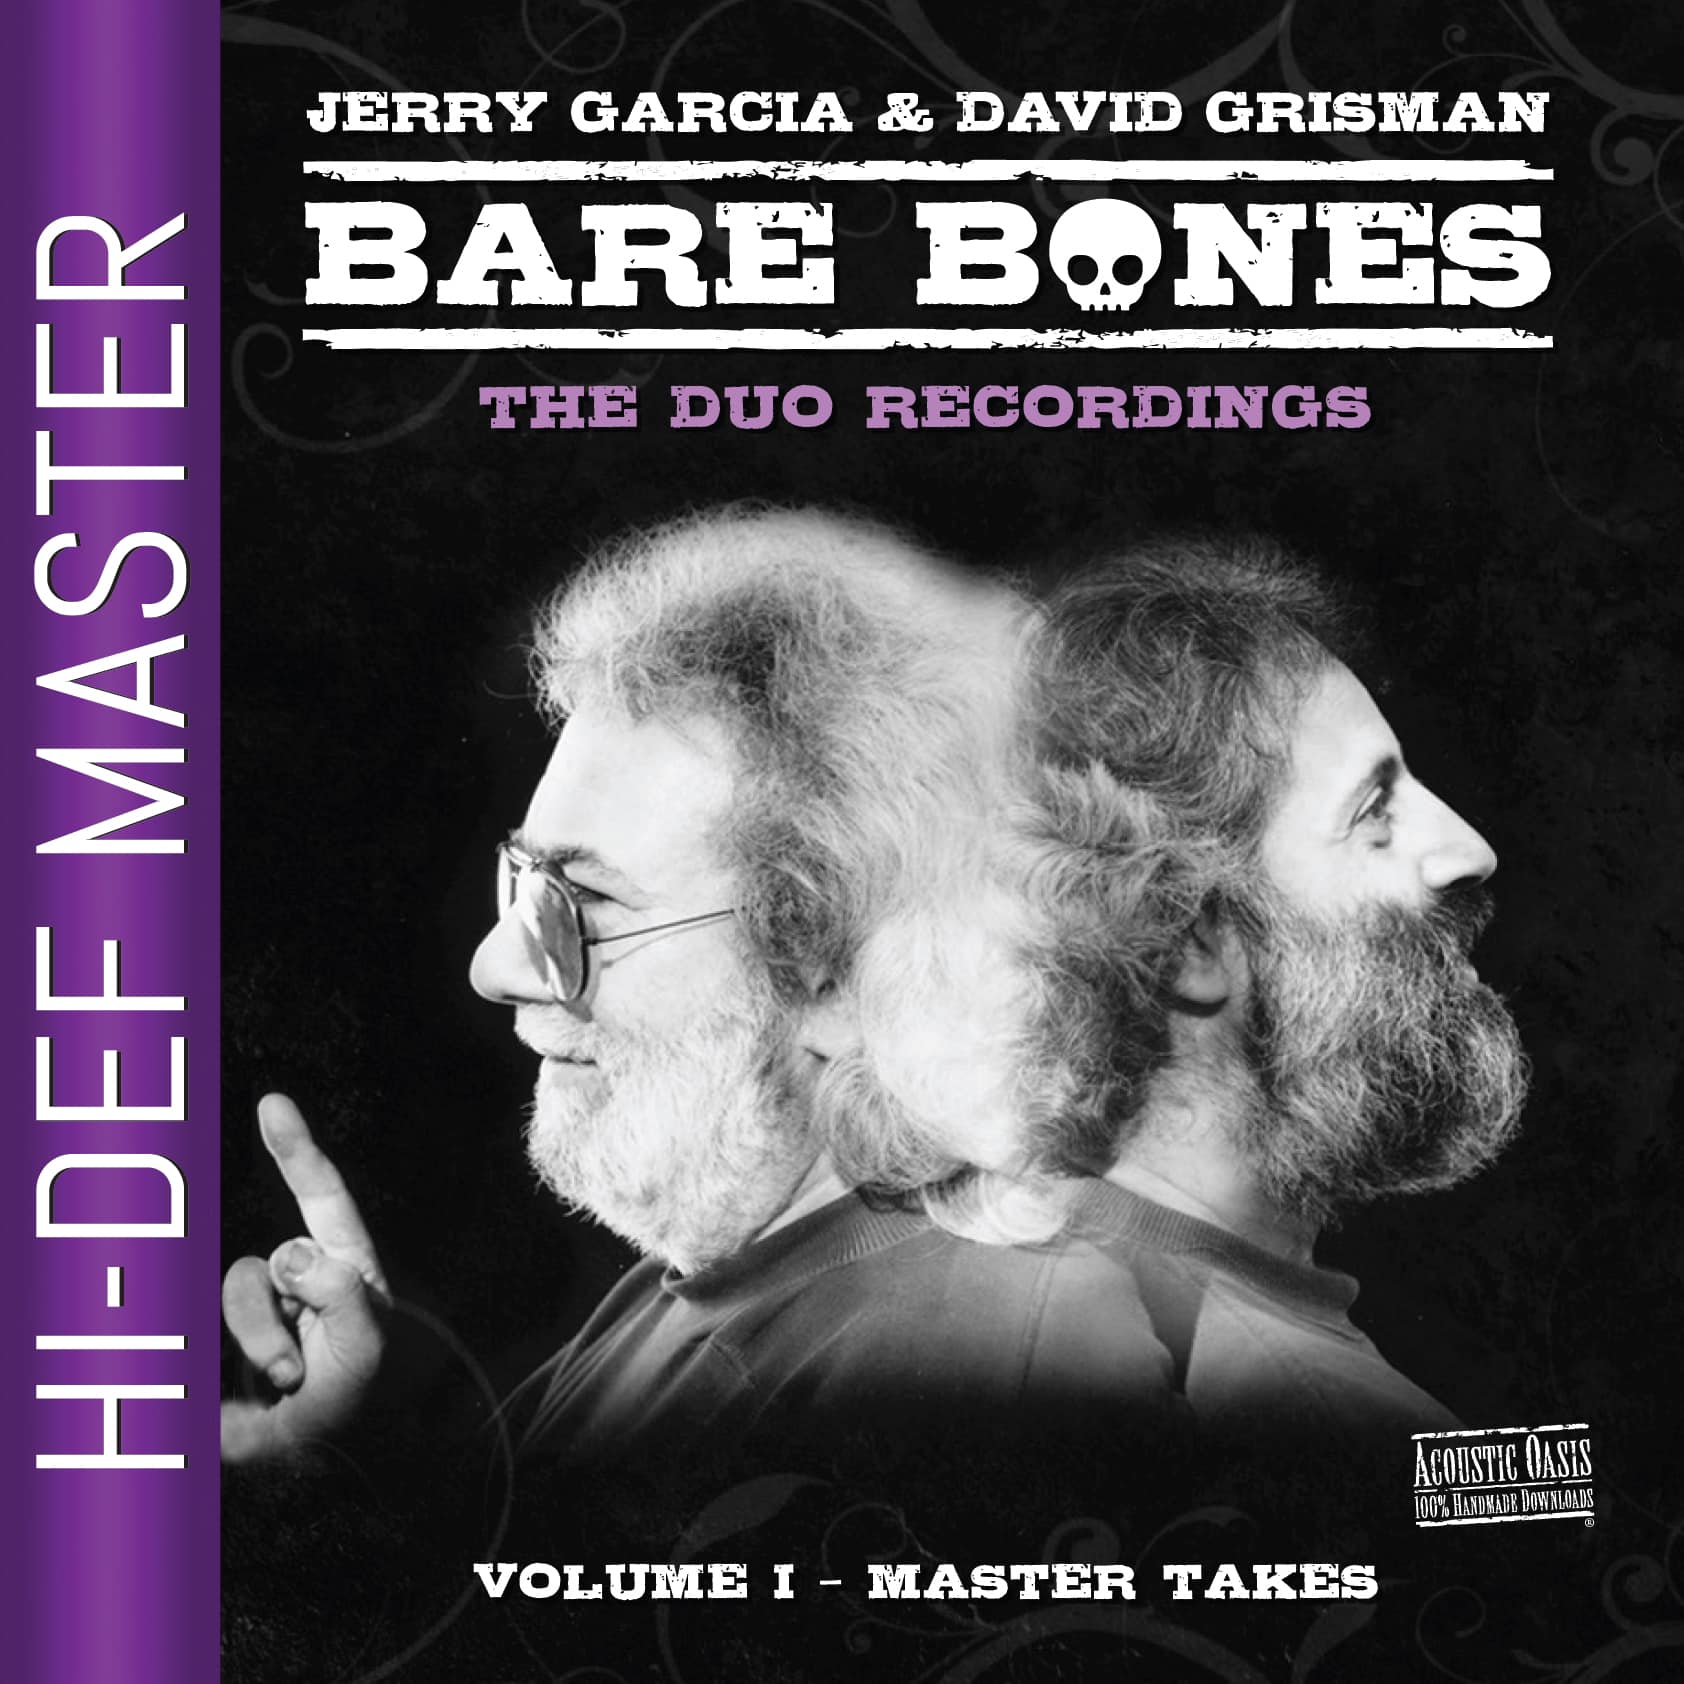 David Grisman Celebrates Jerry Garcia's Birthday with Unreleased Duo Recordings